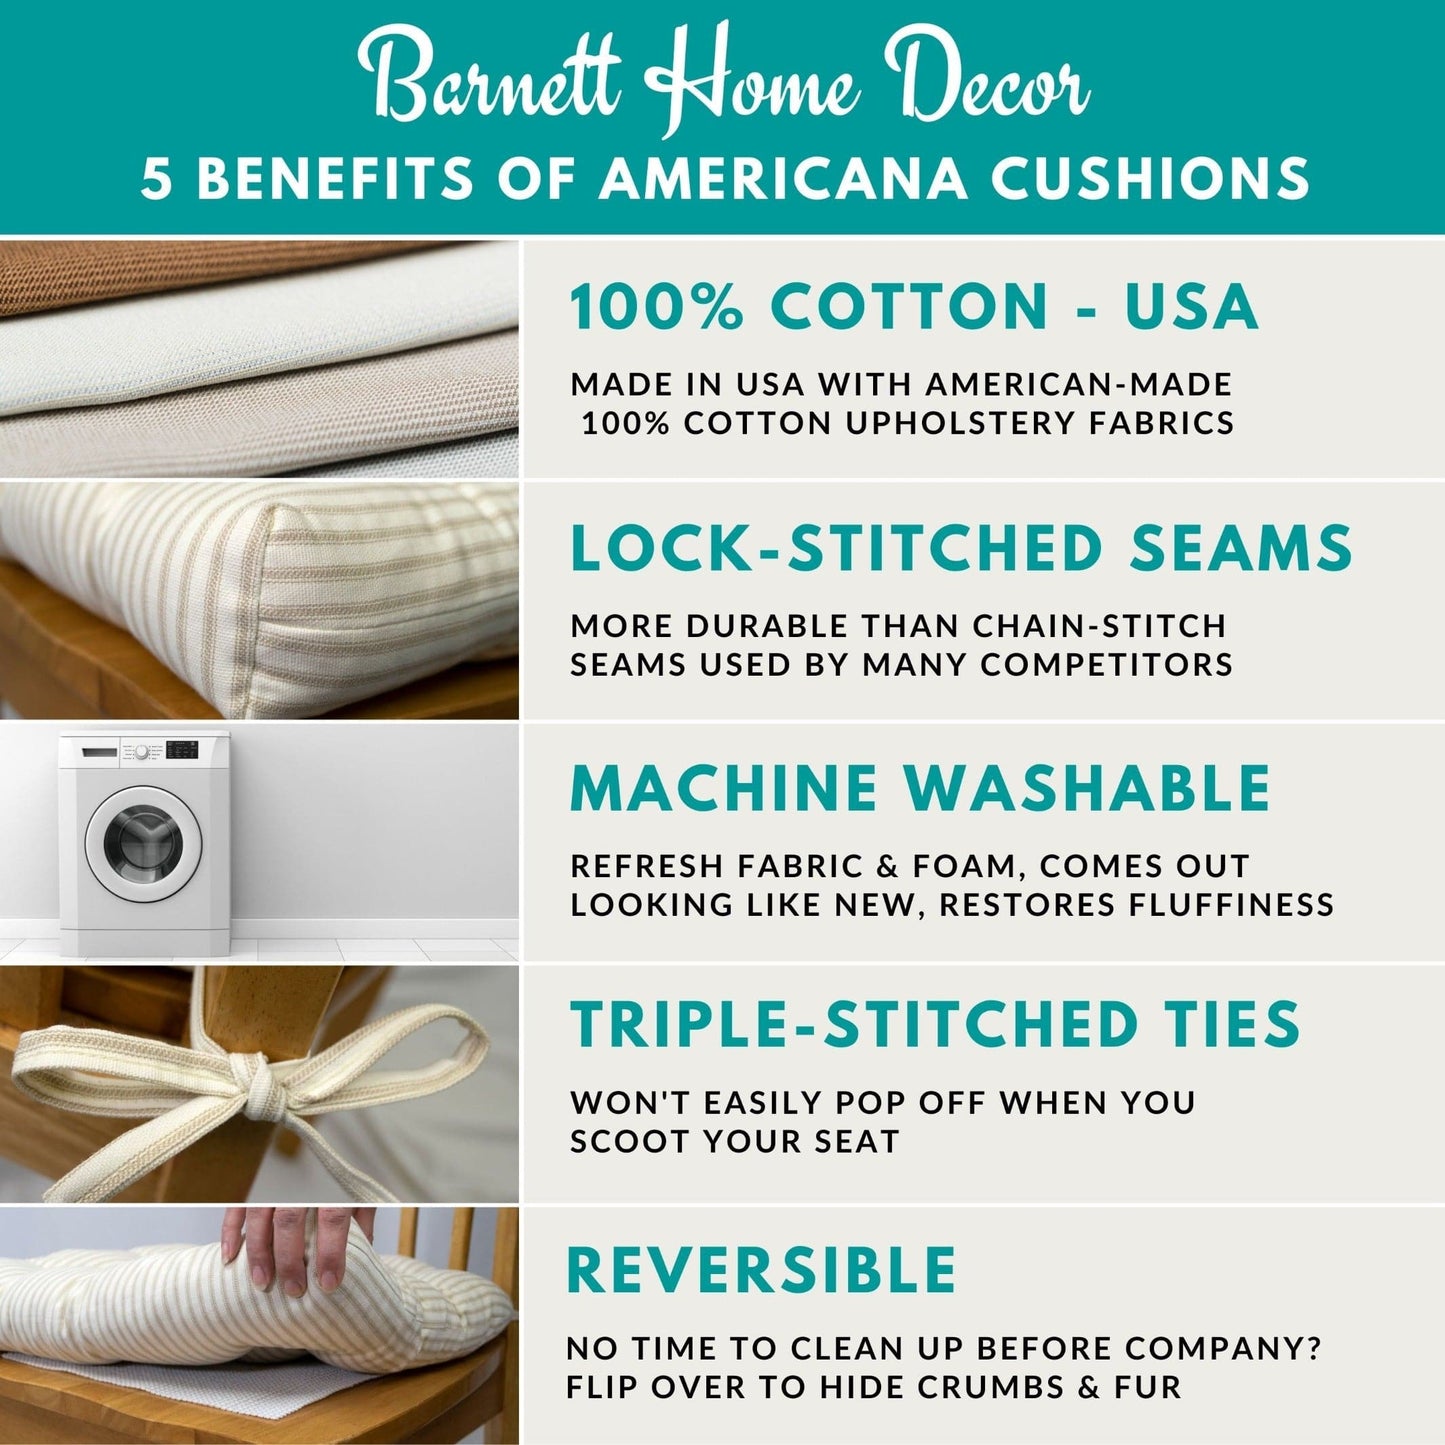 Barnett Home Decor Benefits of Americana Cushions 100% Cotton, Made in USA, Machine Washable, Reversible